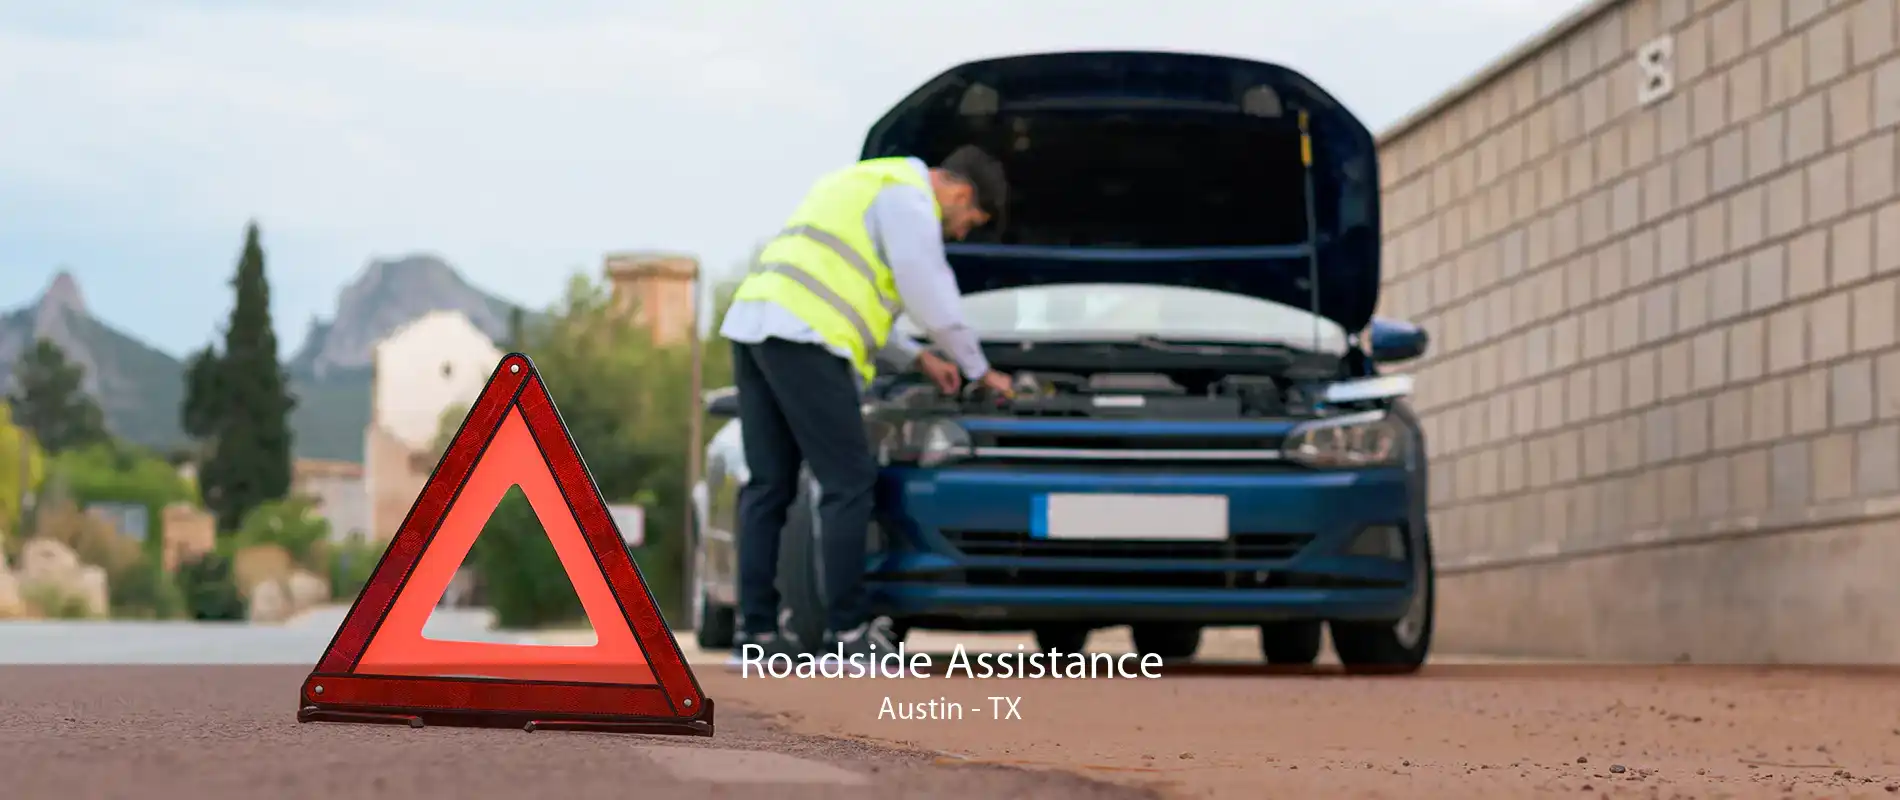 Roadside Assistance Austin - TX